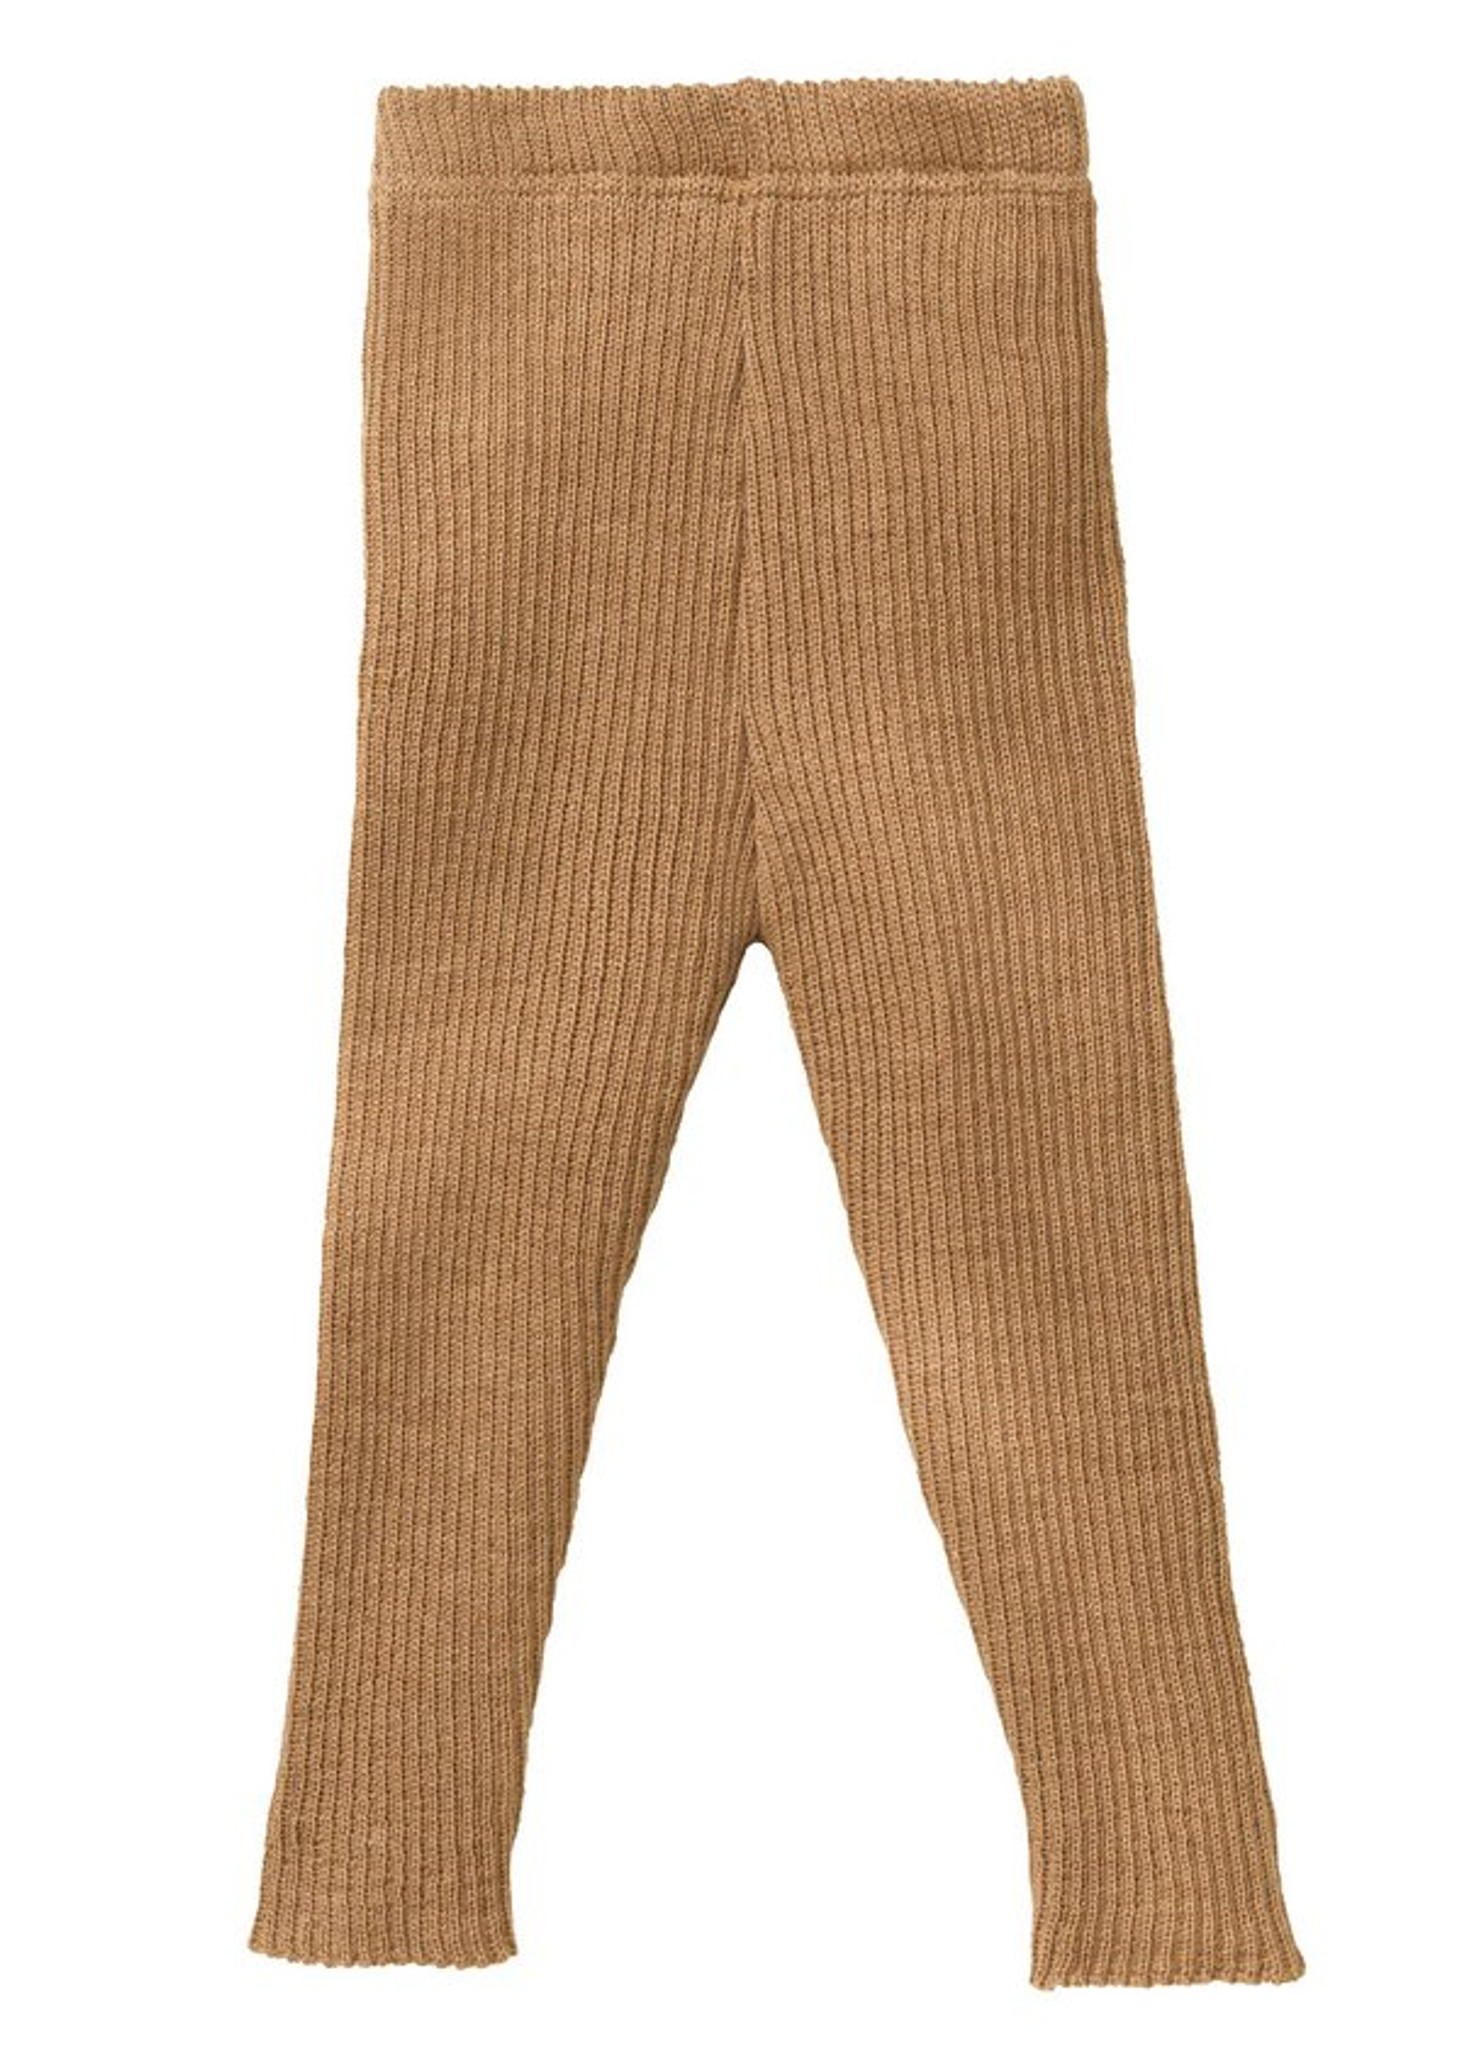 Brown wool leggings girl knit leggings organic eco friendly 100